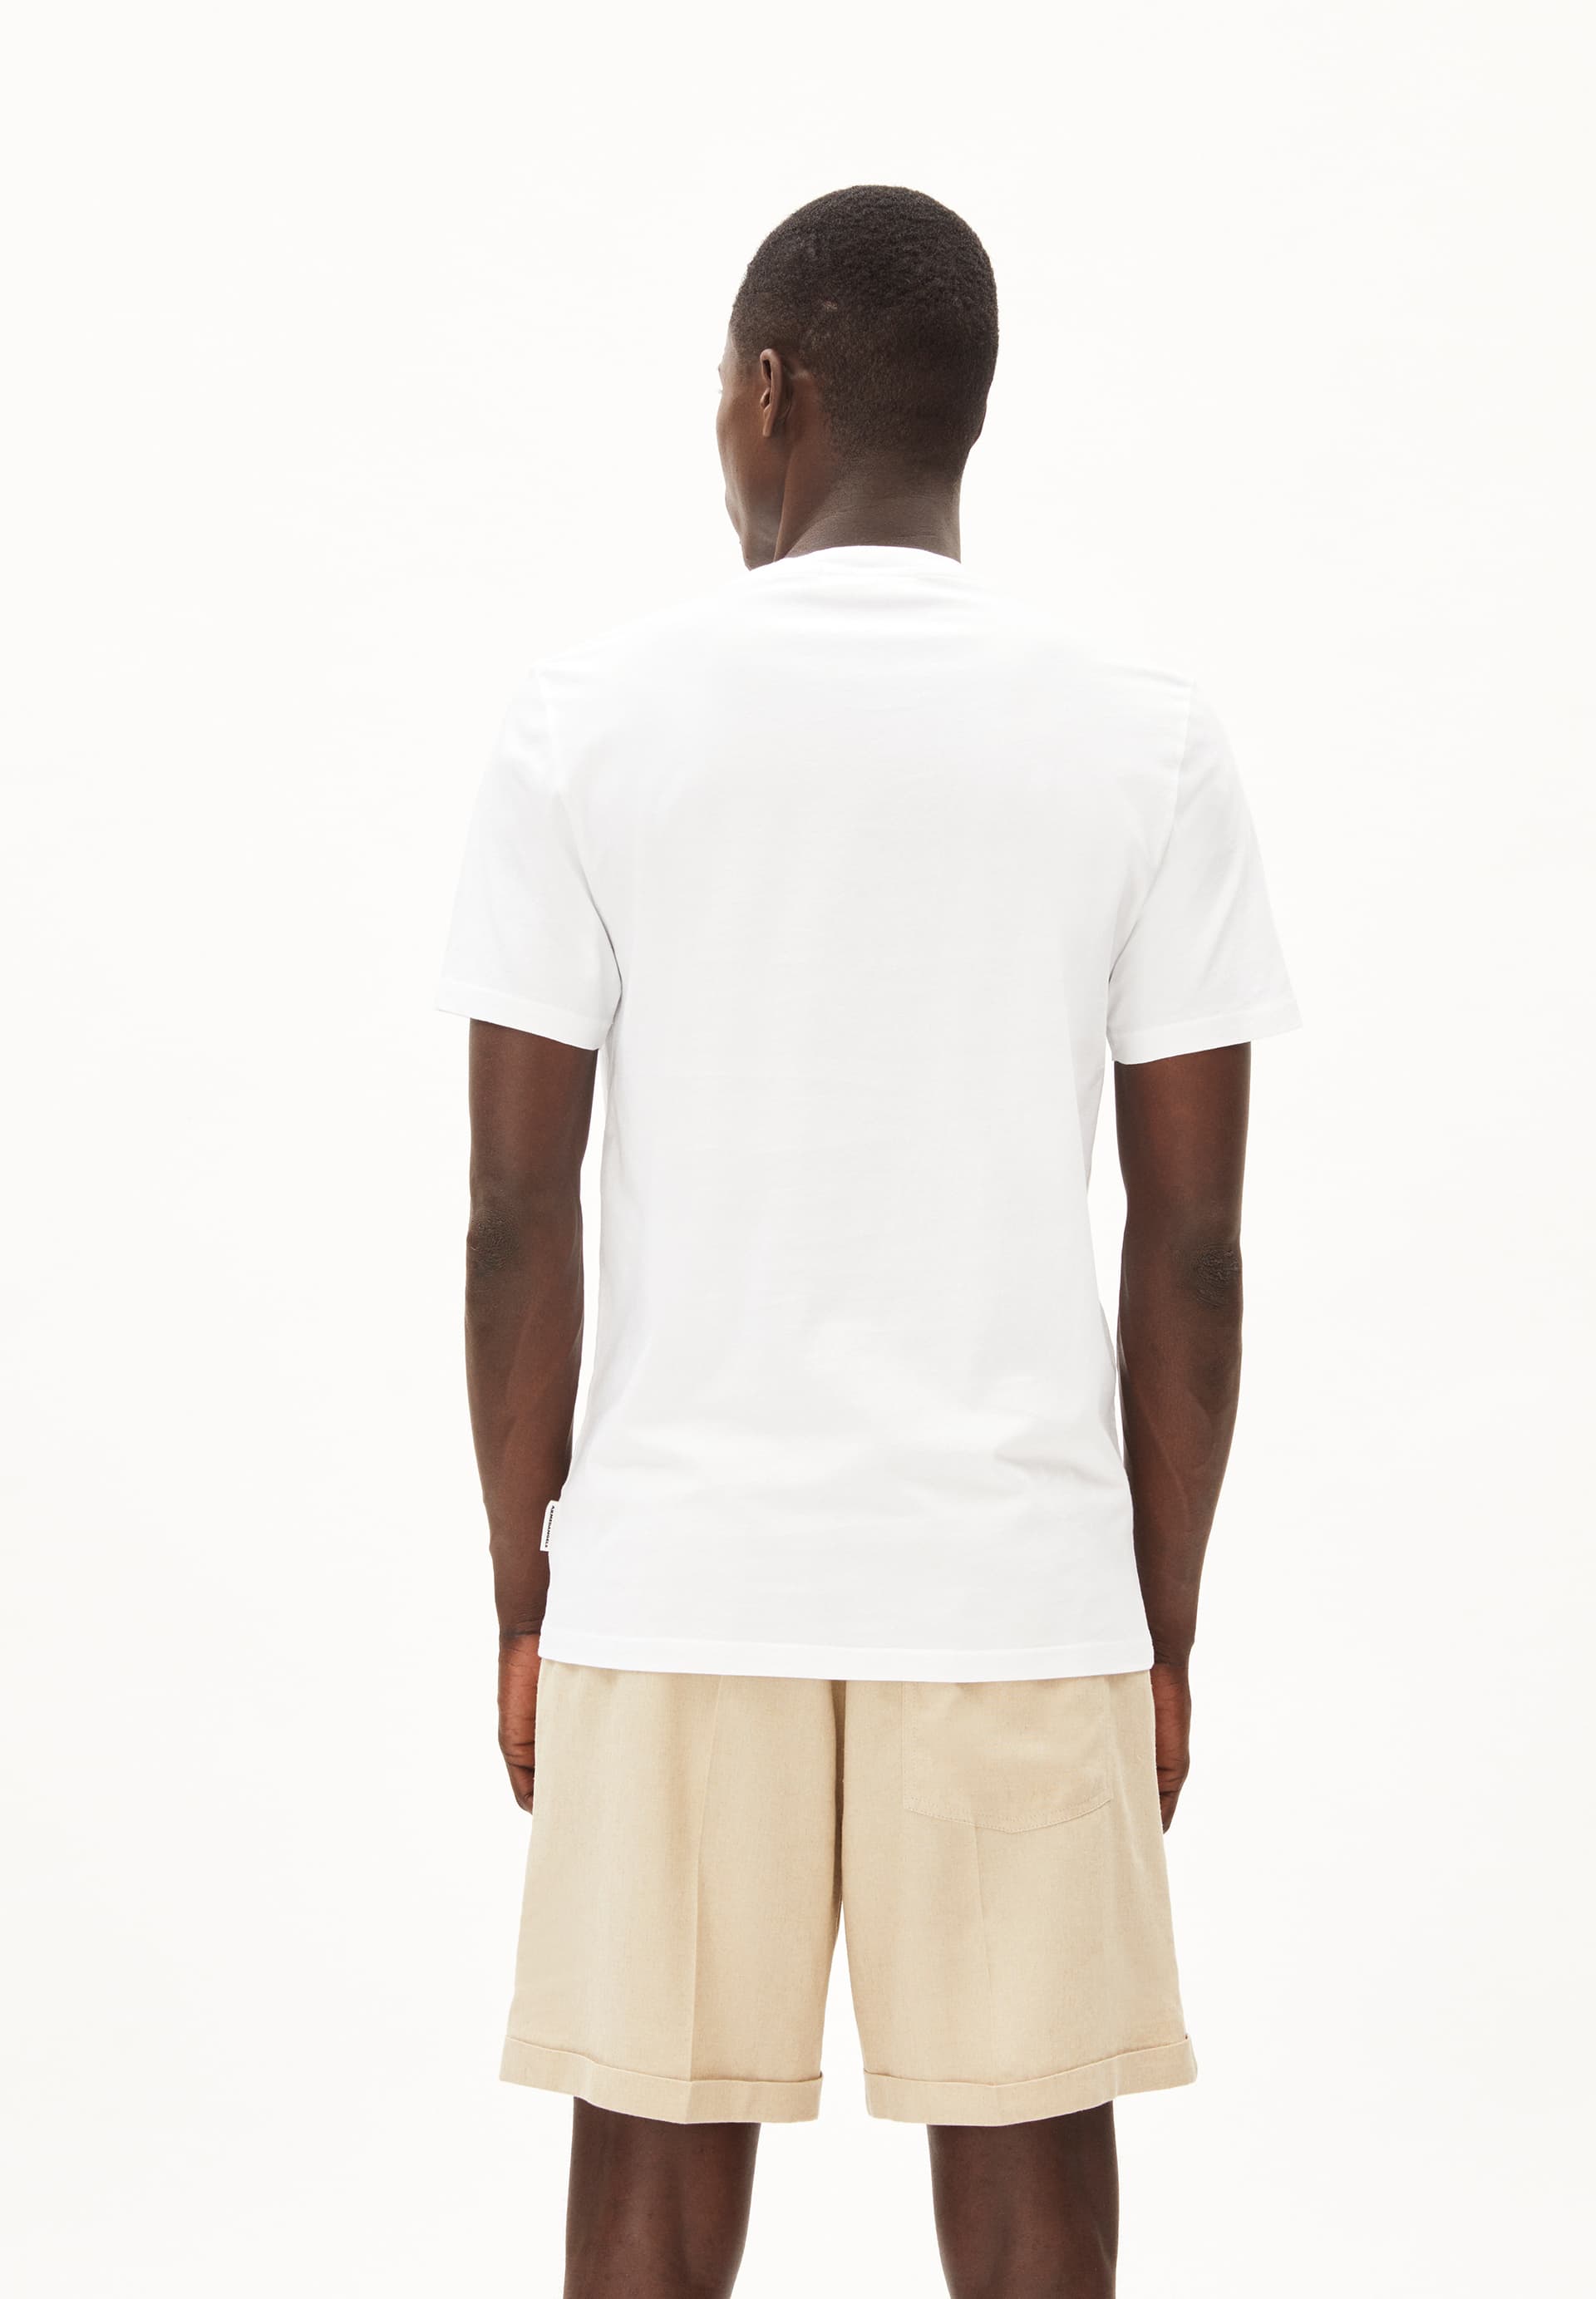 JAAMES LOVAA T-Shirt Regular Fit made of Organic Cotton